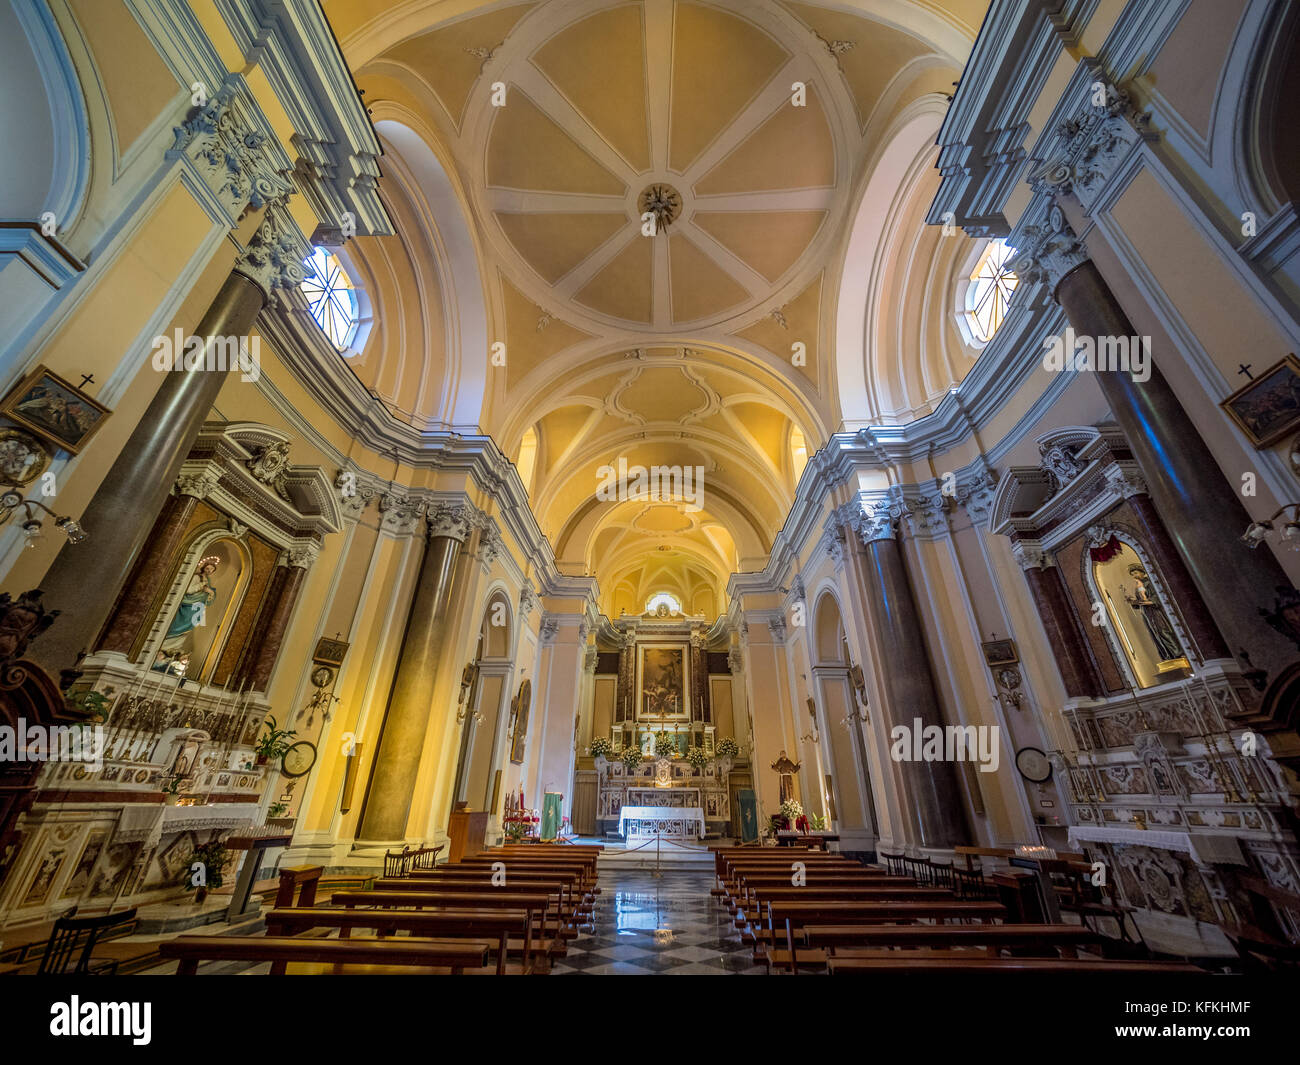 Interno del Convento di San Francesco - Sorrento, Italia. Convento San Francesco, Sorrento, Italia. Foto Stock